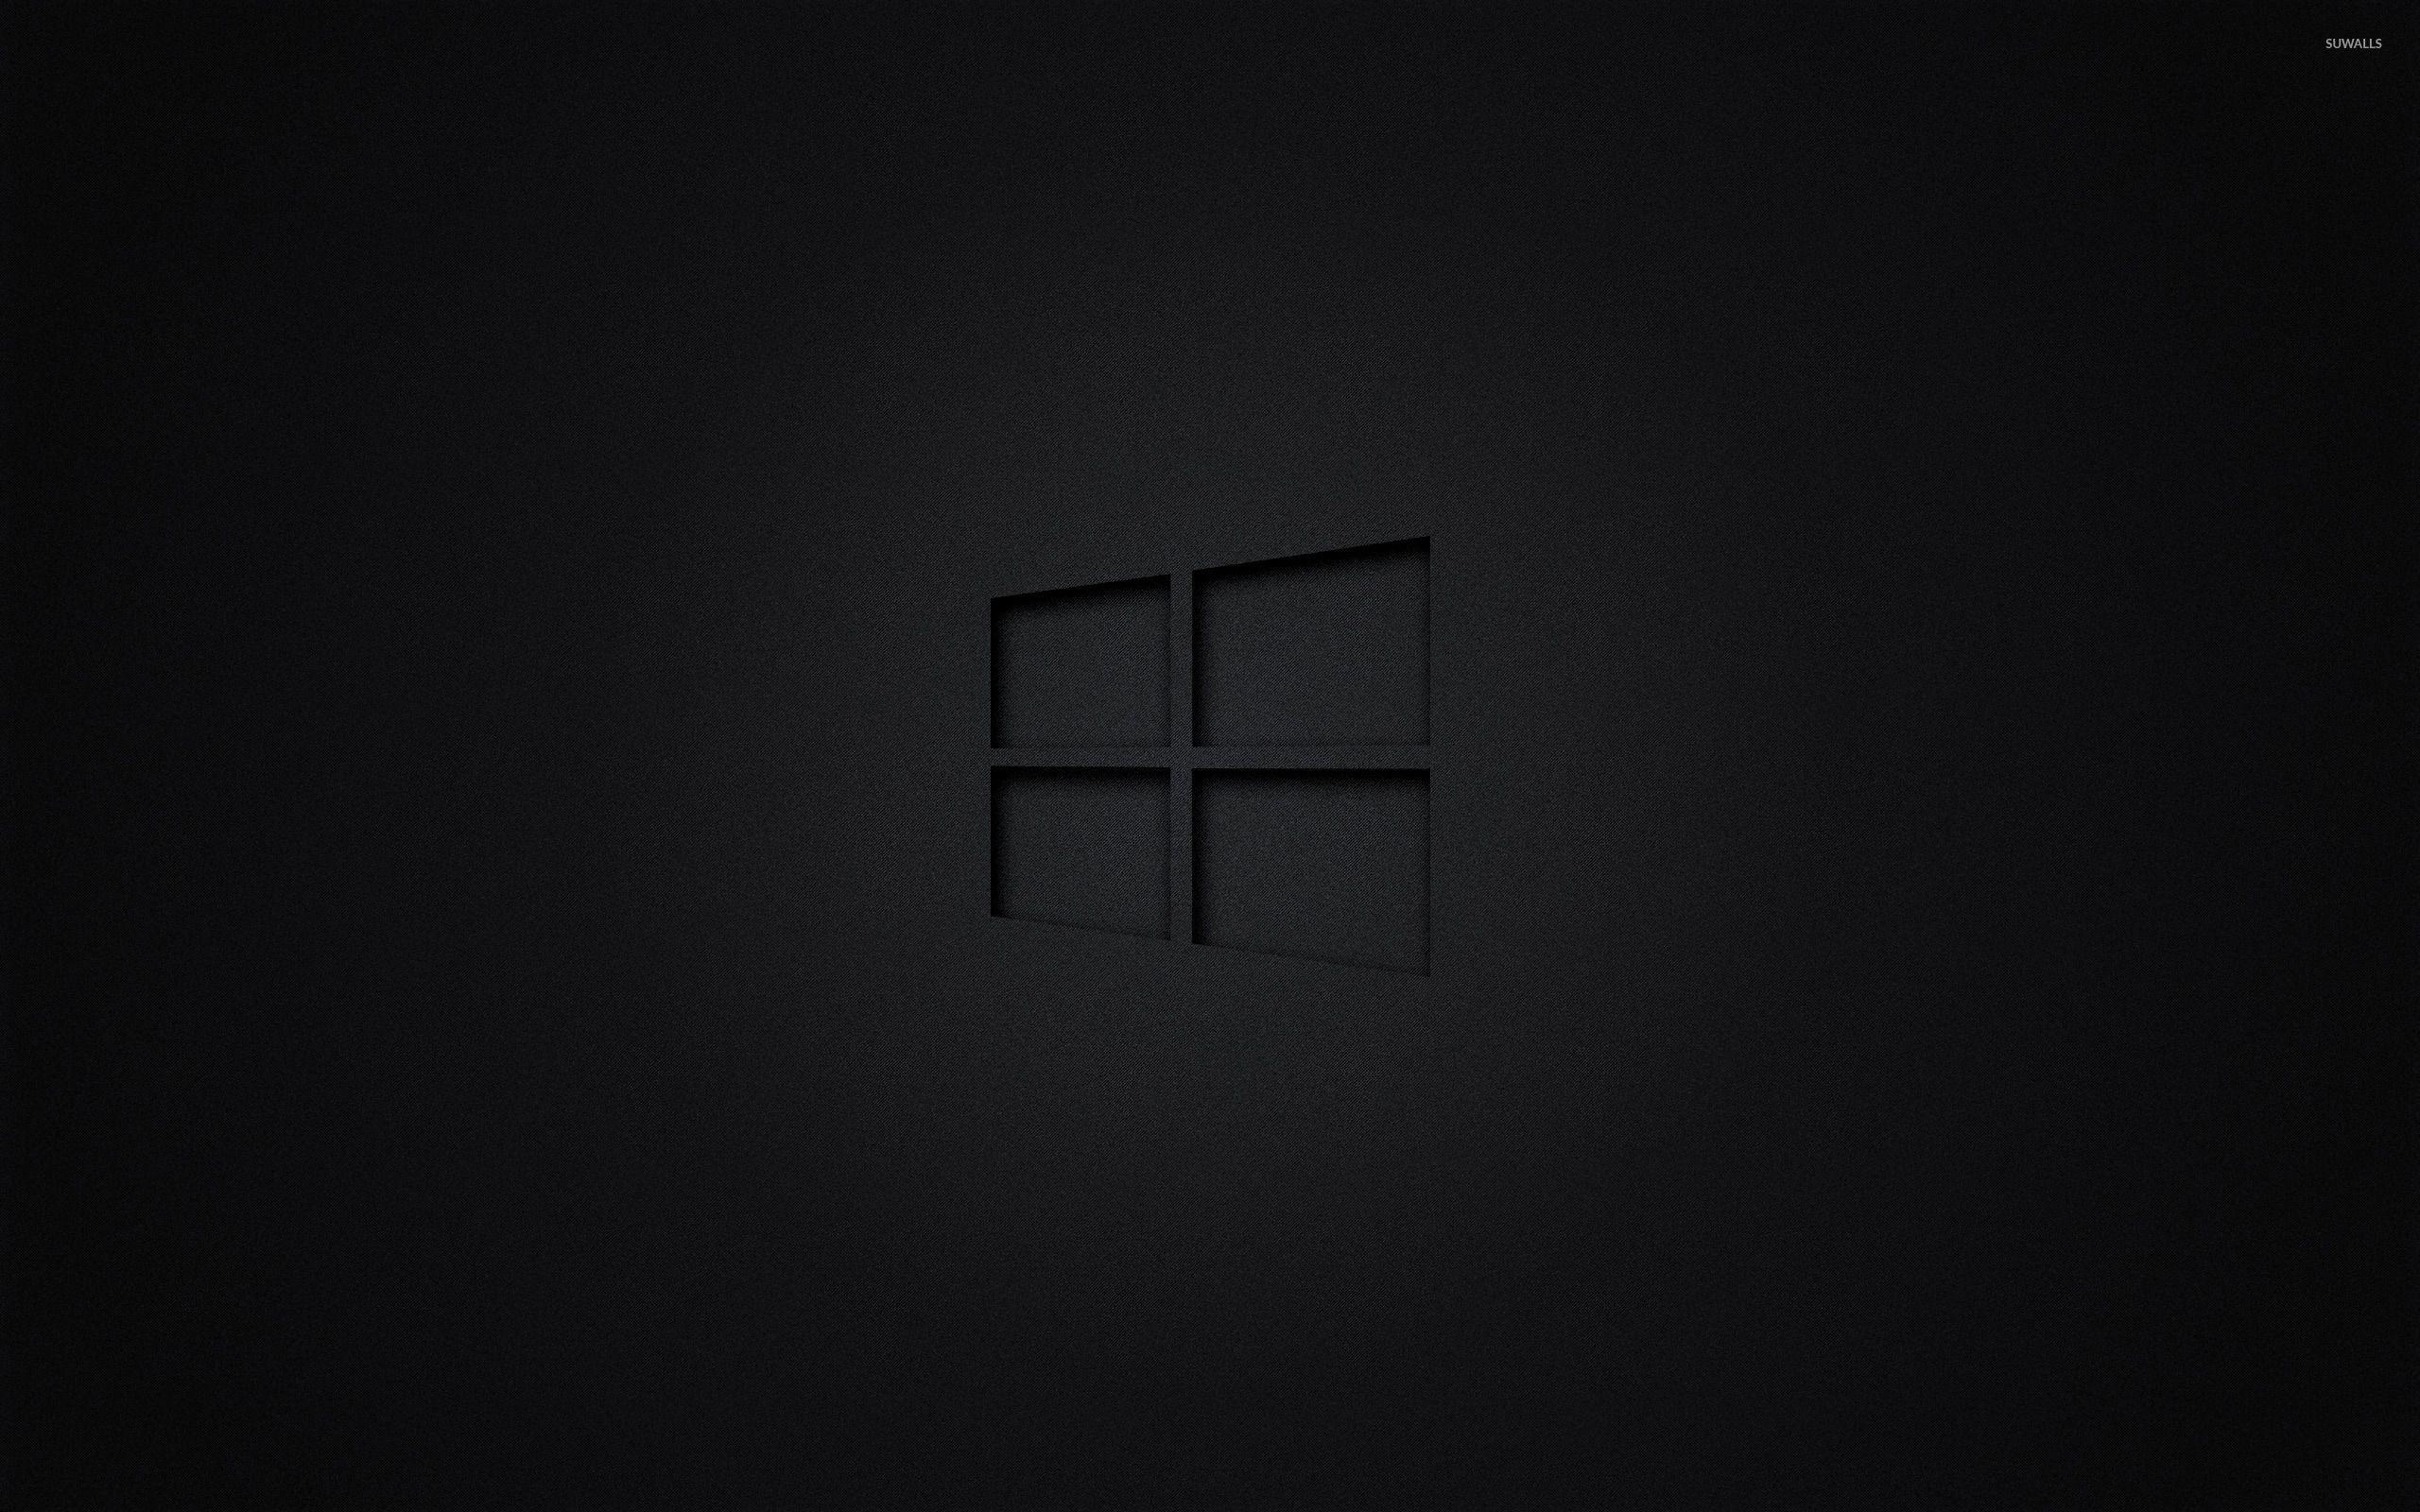 Black Windows Logo - Windows 10 transparent logo on black wallpaper Computer, black ...